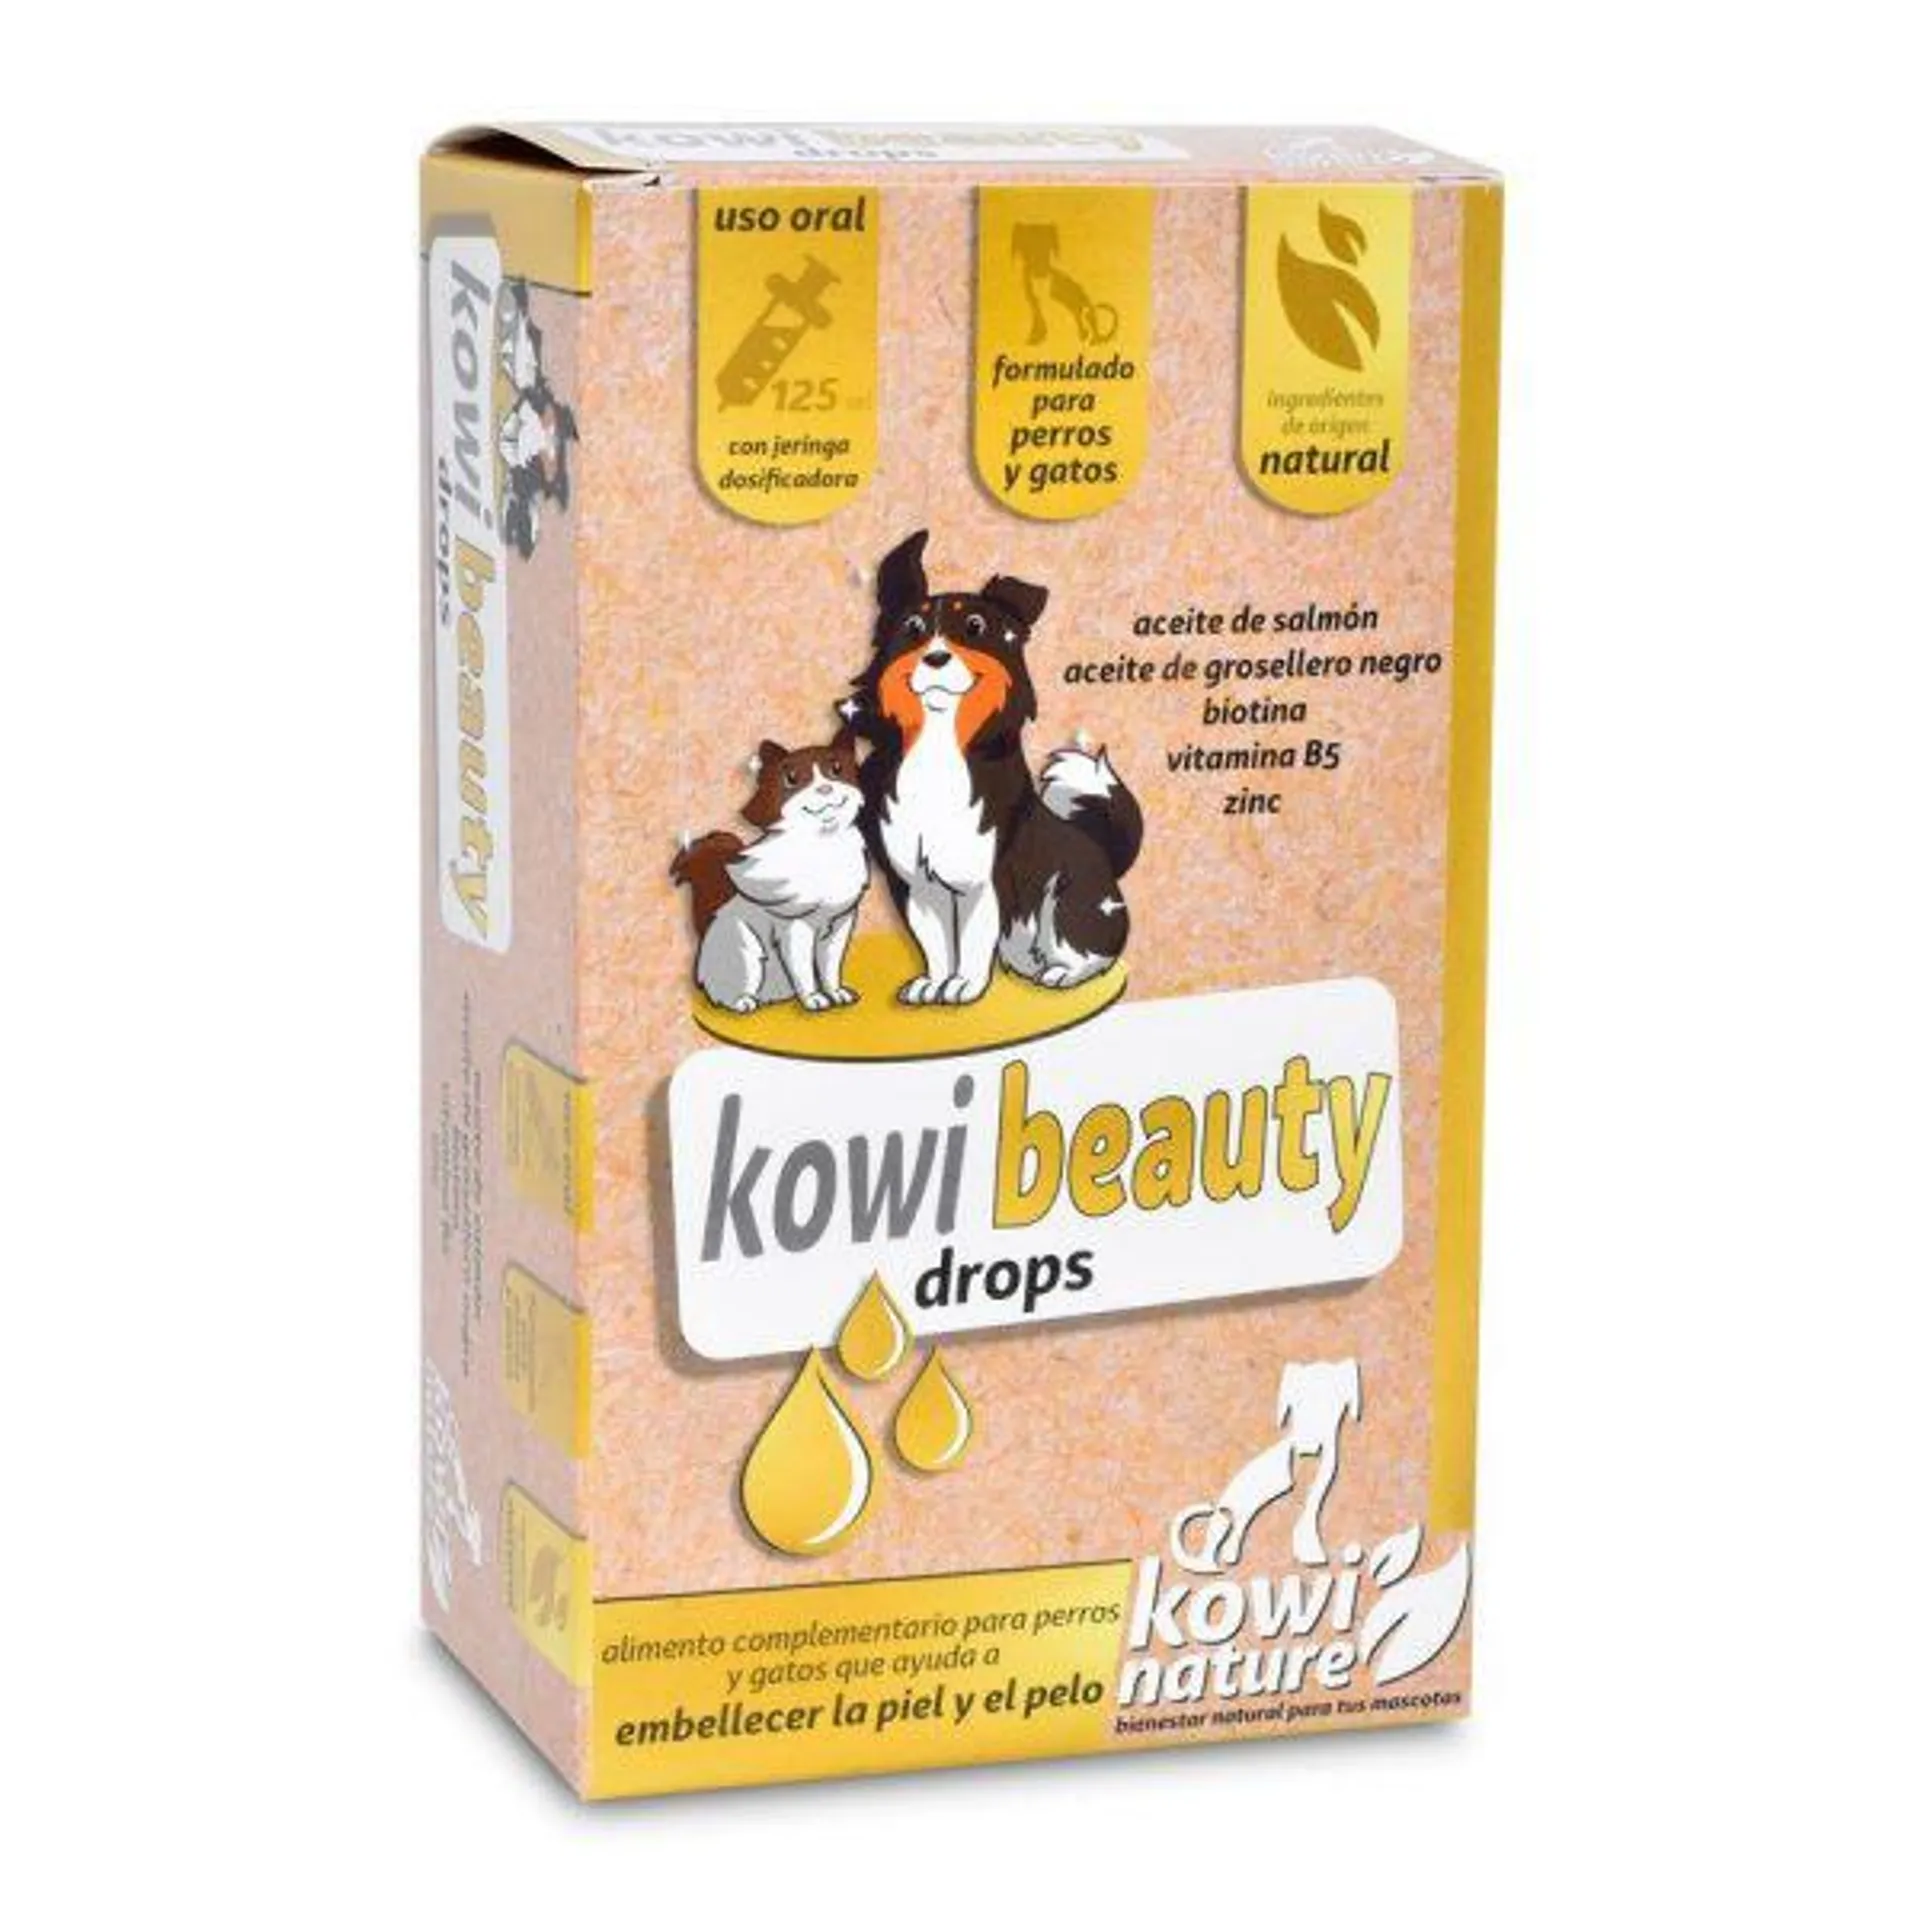 Kowi beauty drops – Kowi Nature